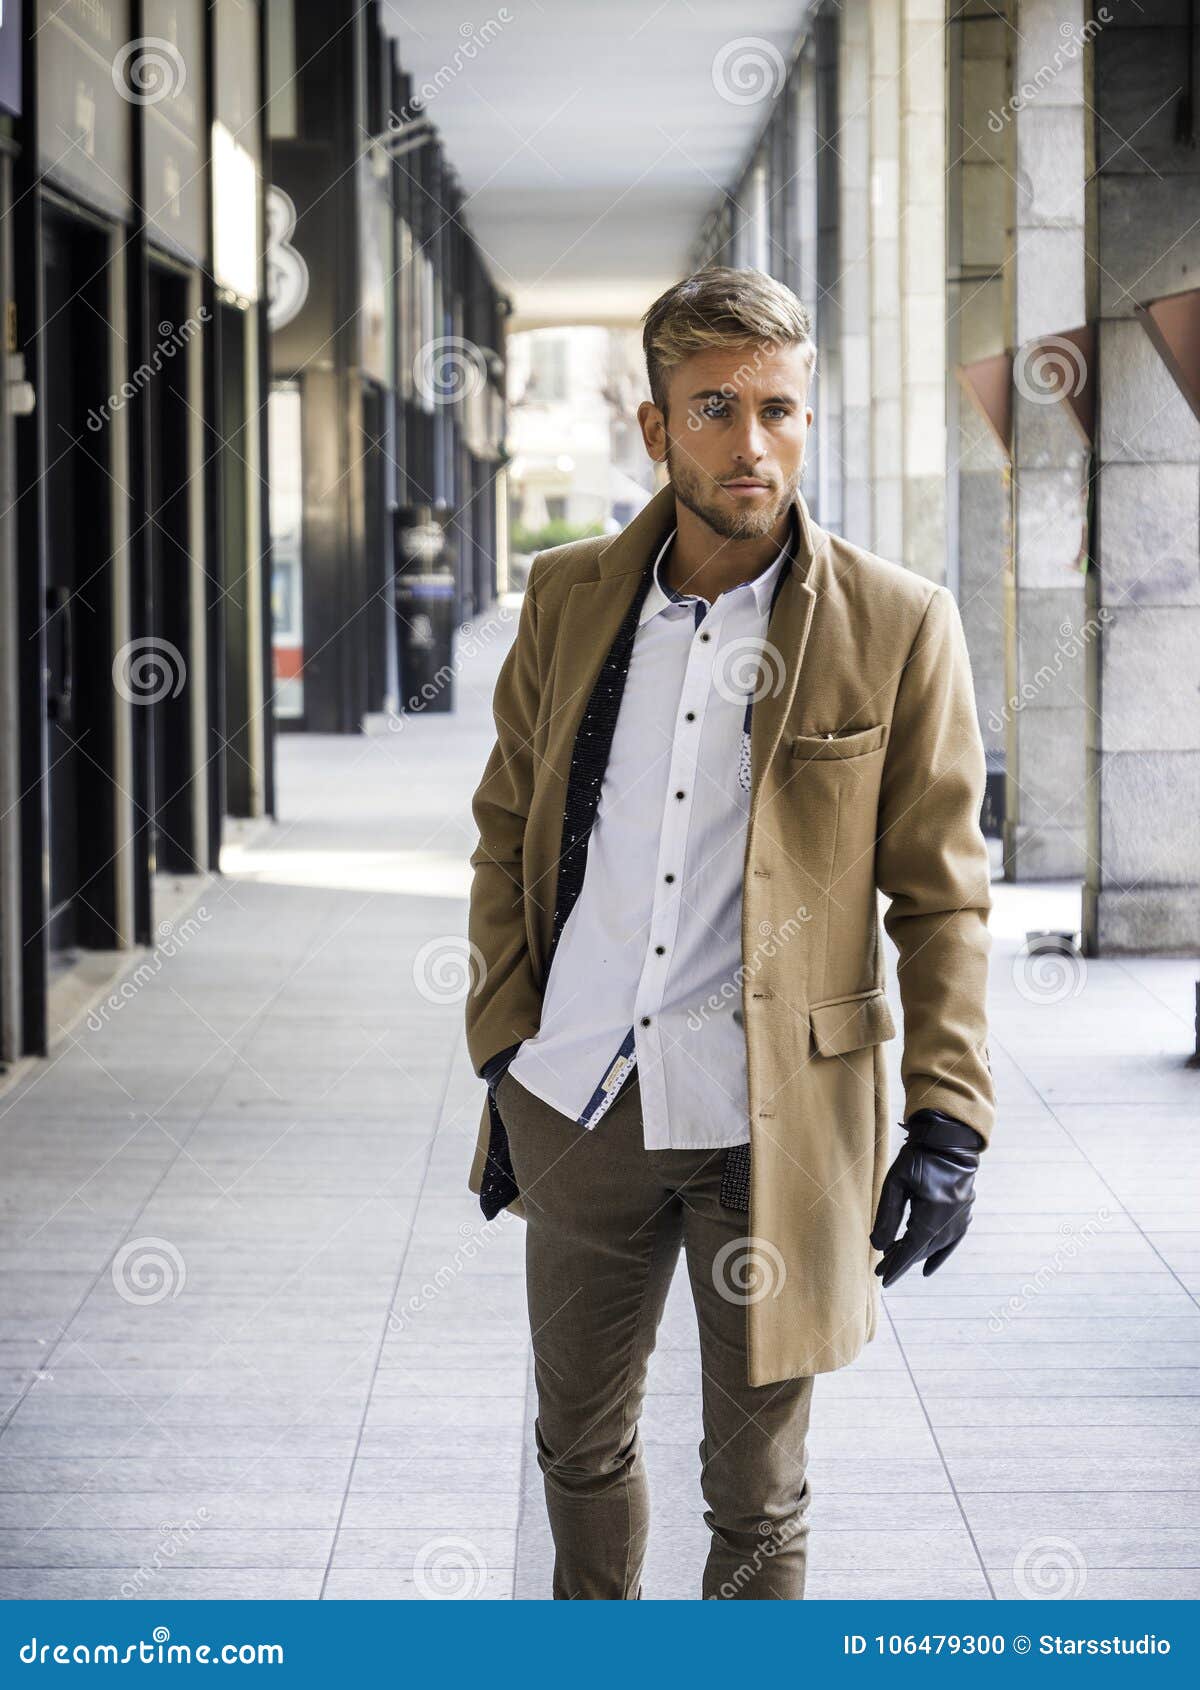 Trendy Man in European City Stock Photo - Image of gloves, 106479300